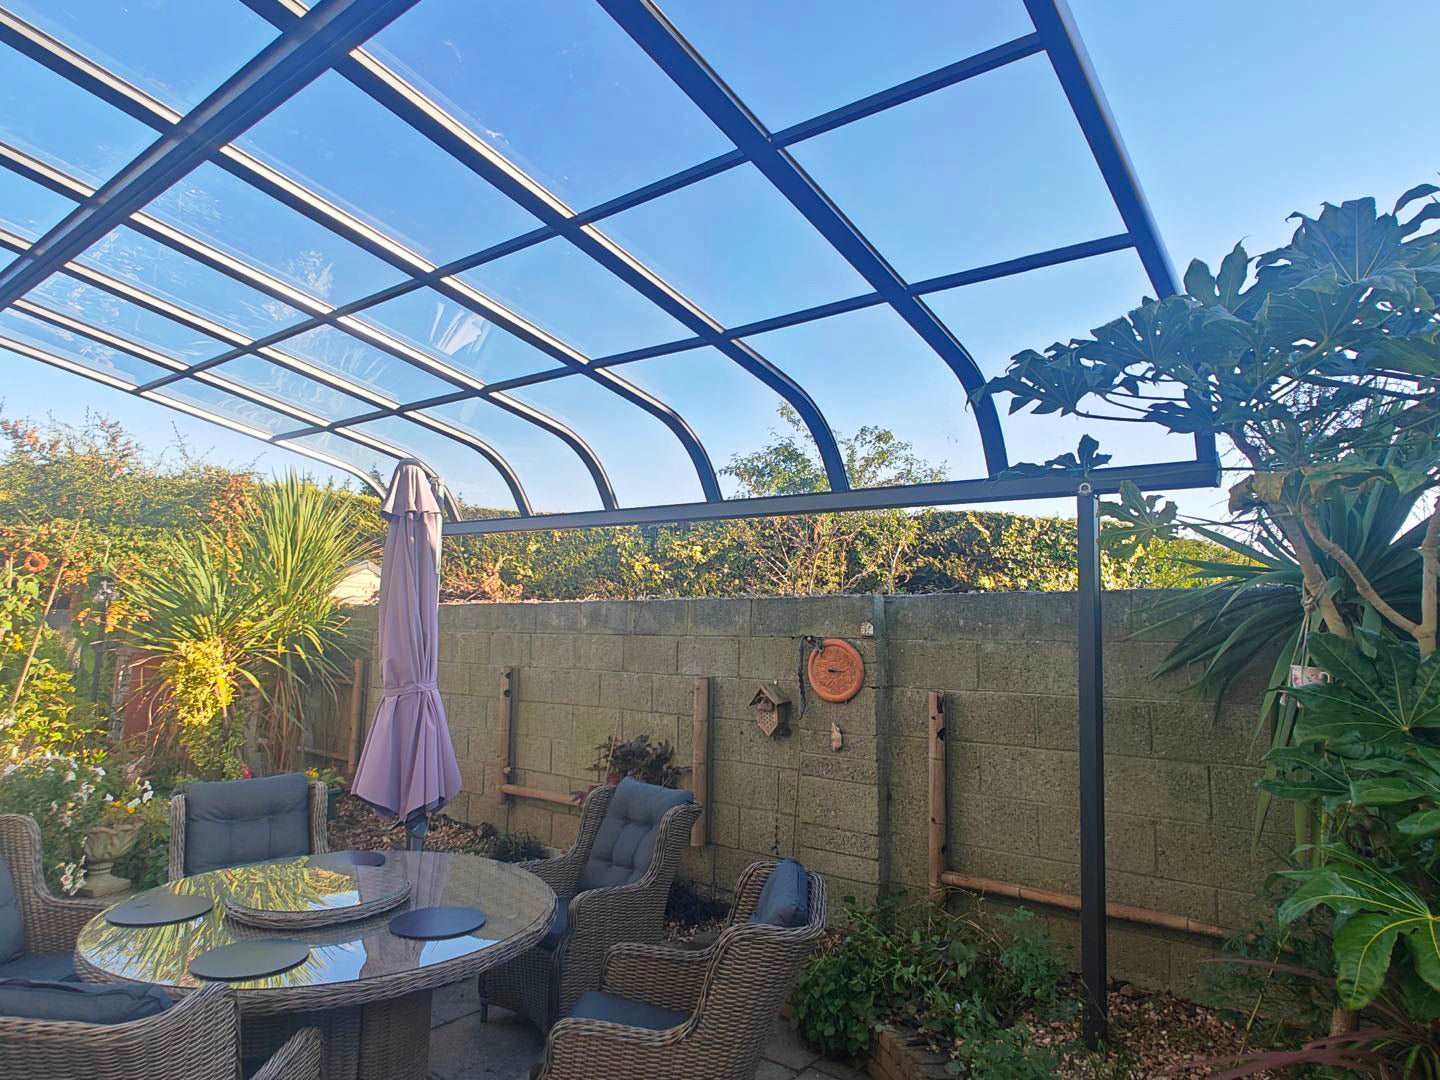 Crodaun, Cellbridge, Co Kildare aluminium patio canopy